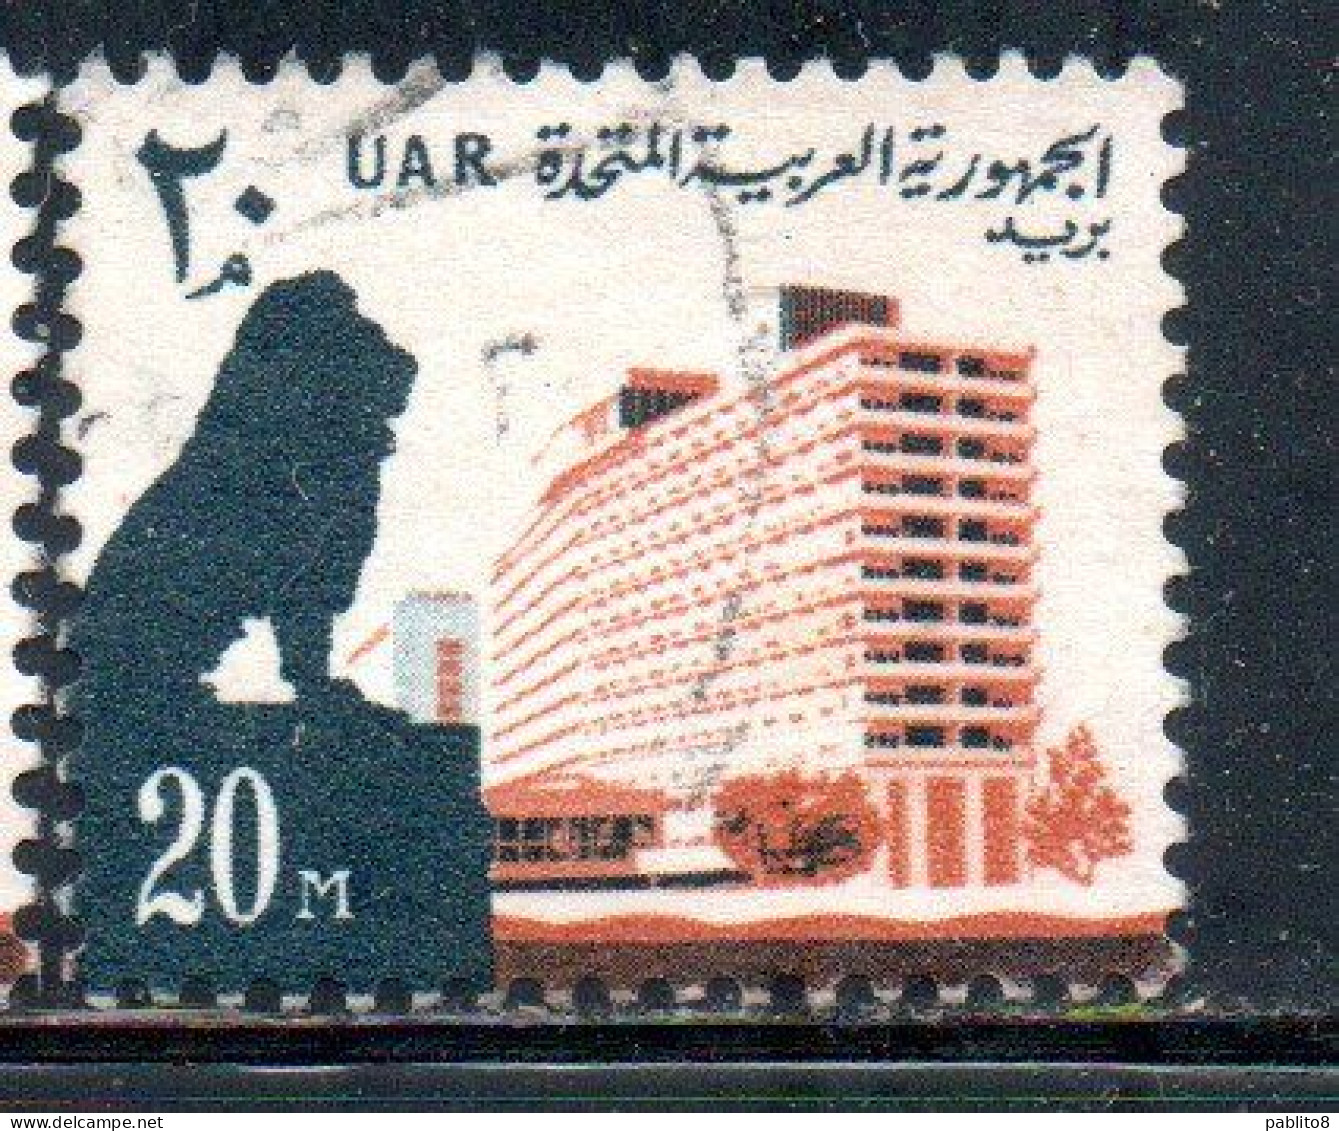 UAR EGYPT EGITTO 1964 1967 LION AND NILE HILTON HOTEL 20m USED USATO OBLITERE' - Gebruikt